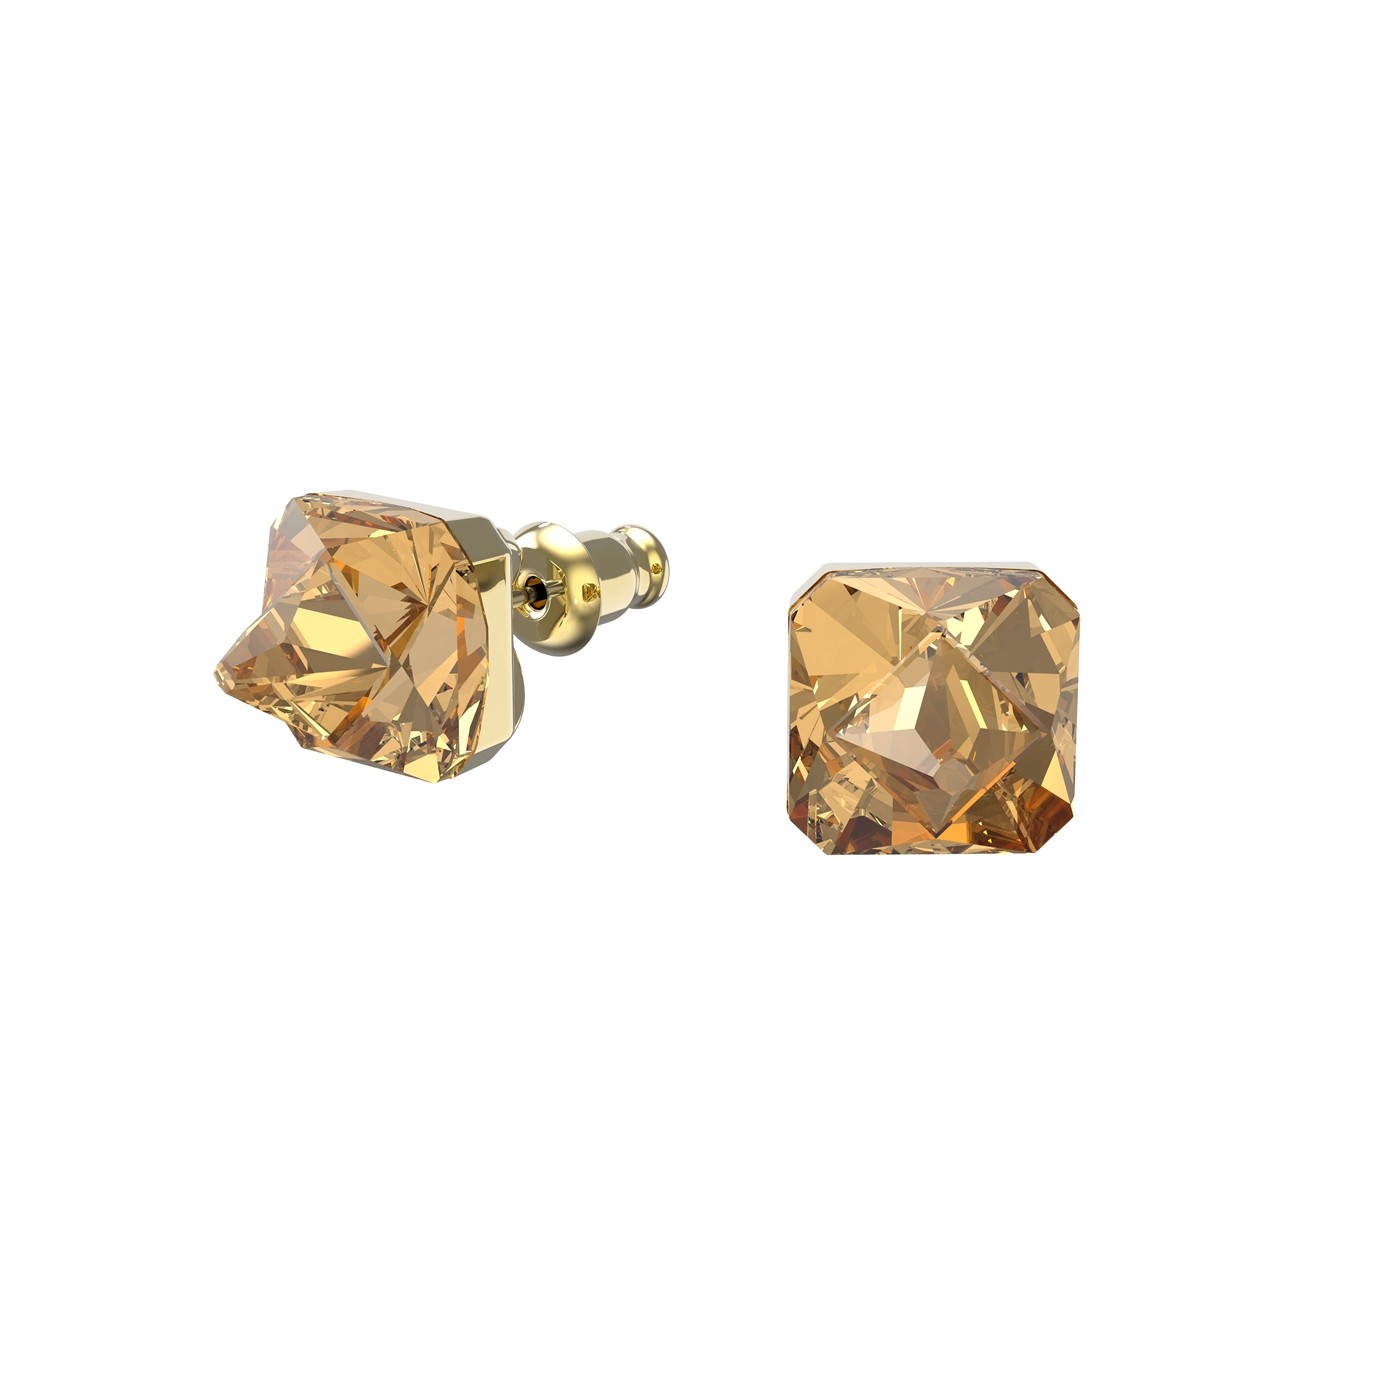 Chroma Gold Tone Plated Pyramid Crystal Stud Earrings